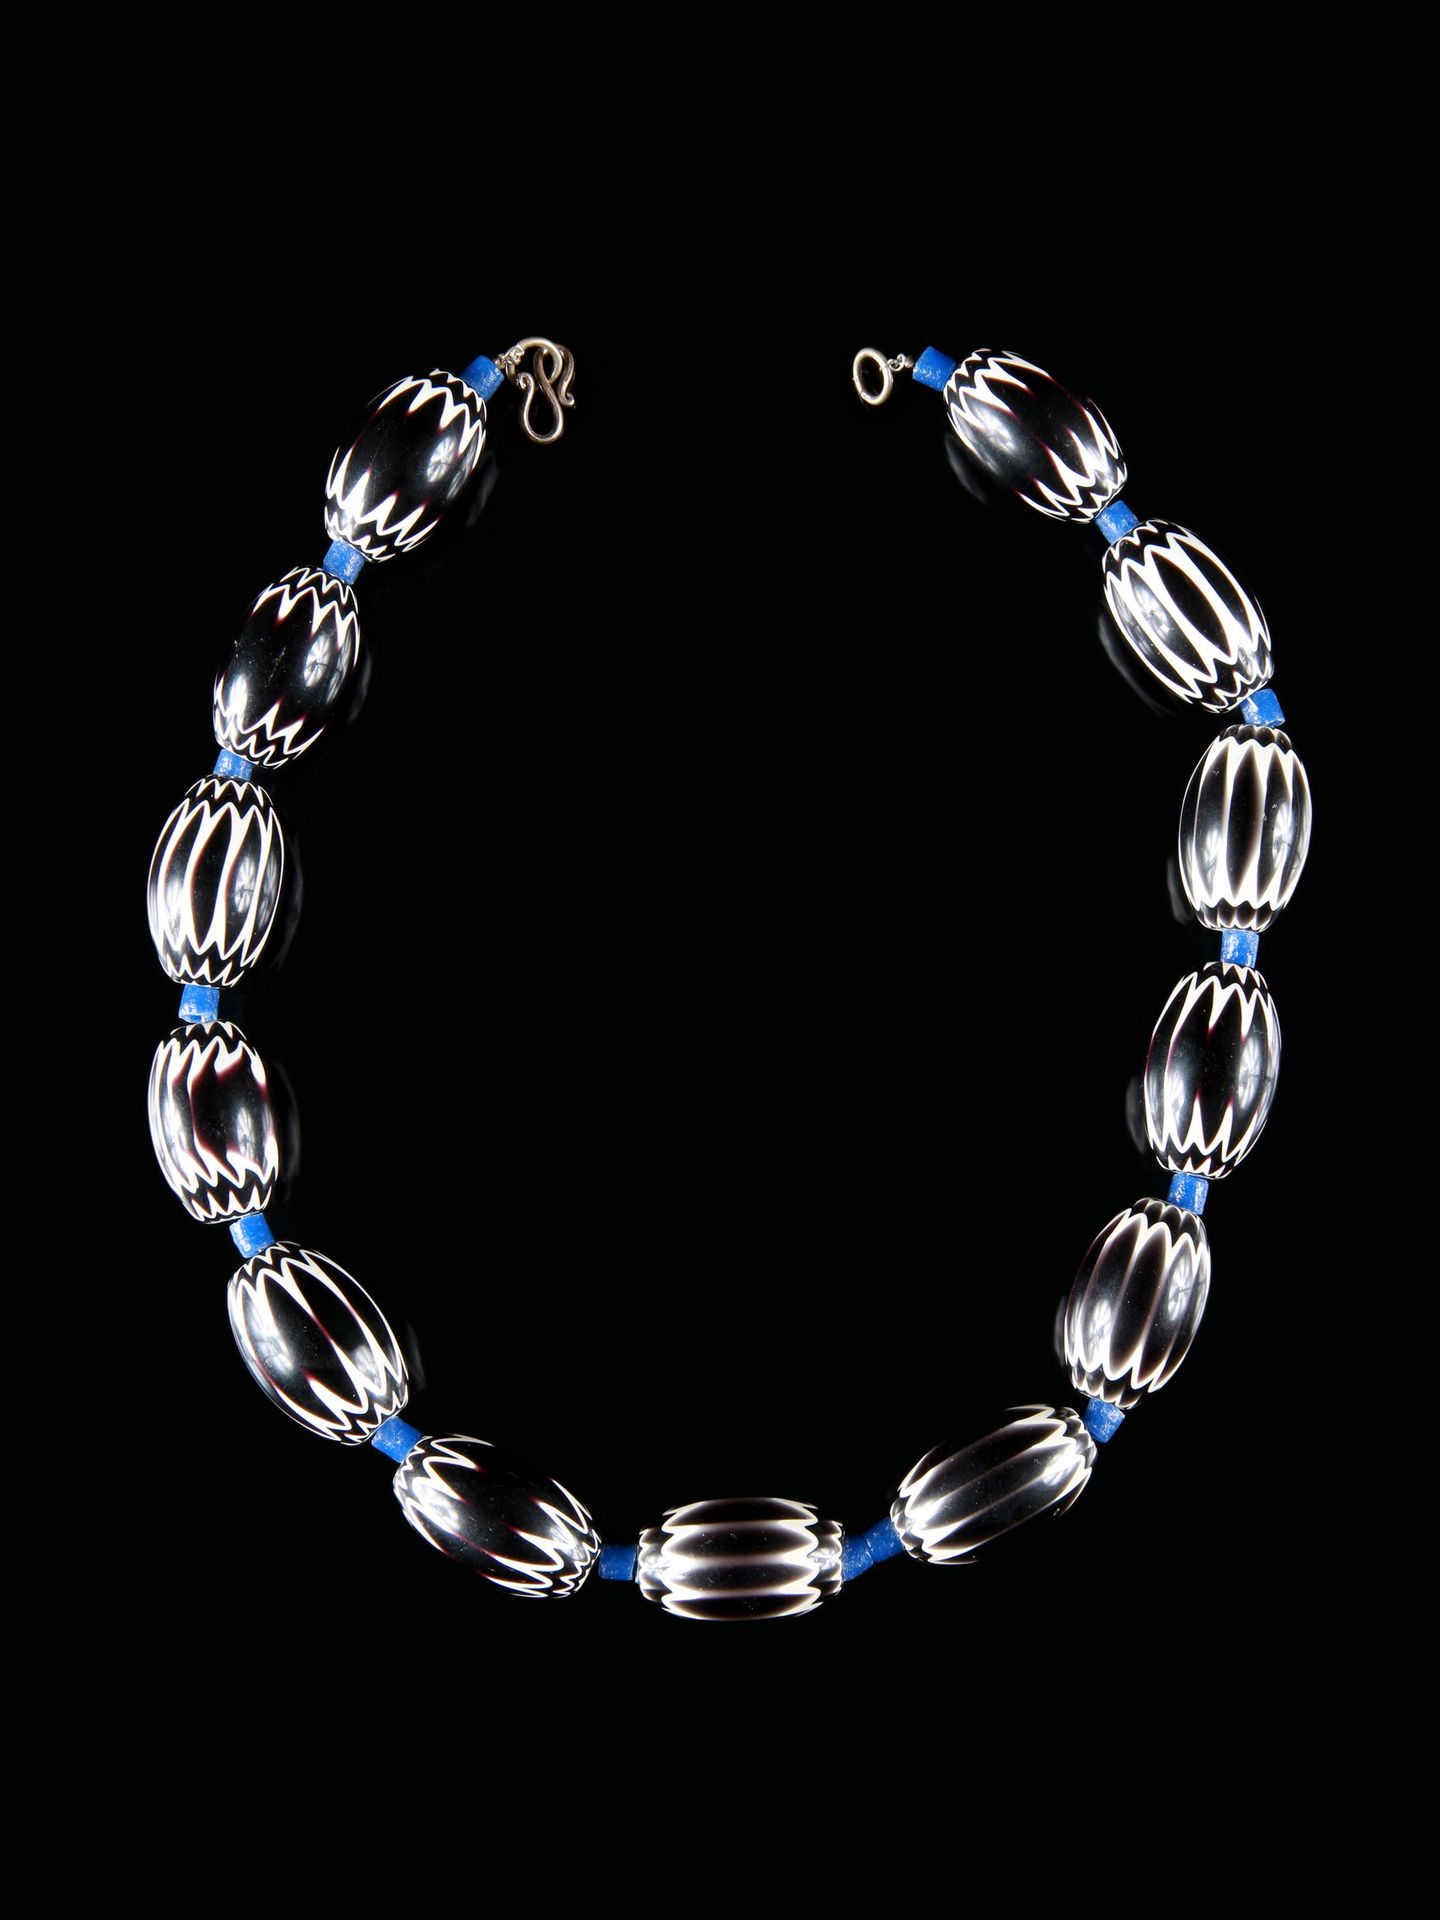 A Chevron Beads Necklace Collana, perline chevron

Africa occidentale

Ohne Sock&hellip;